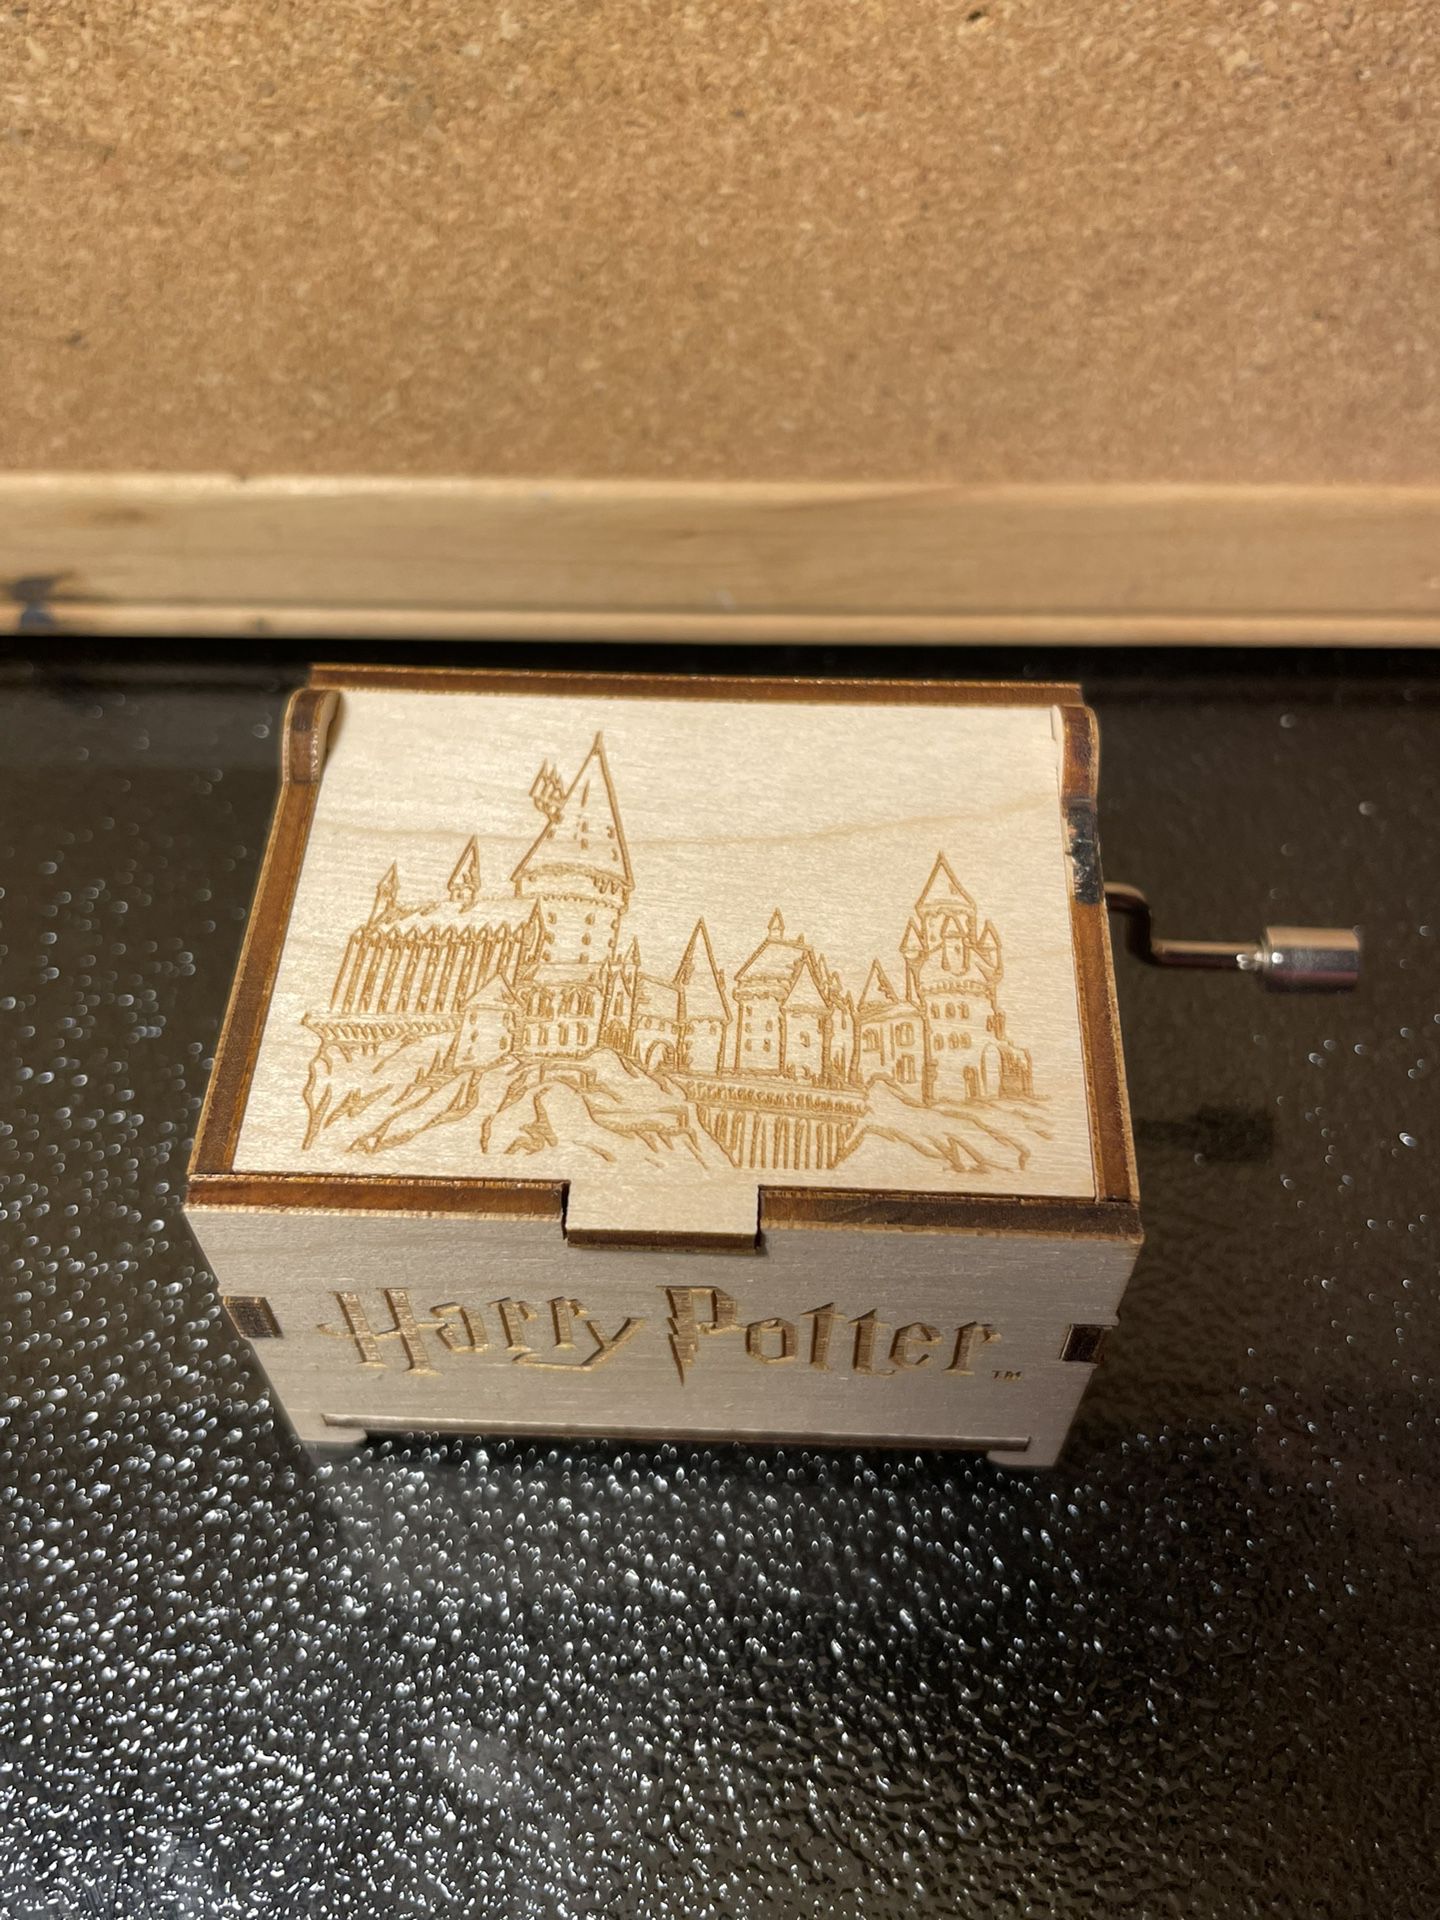 Harry Potter Music Box